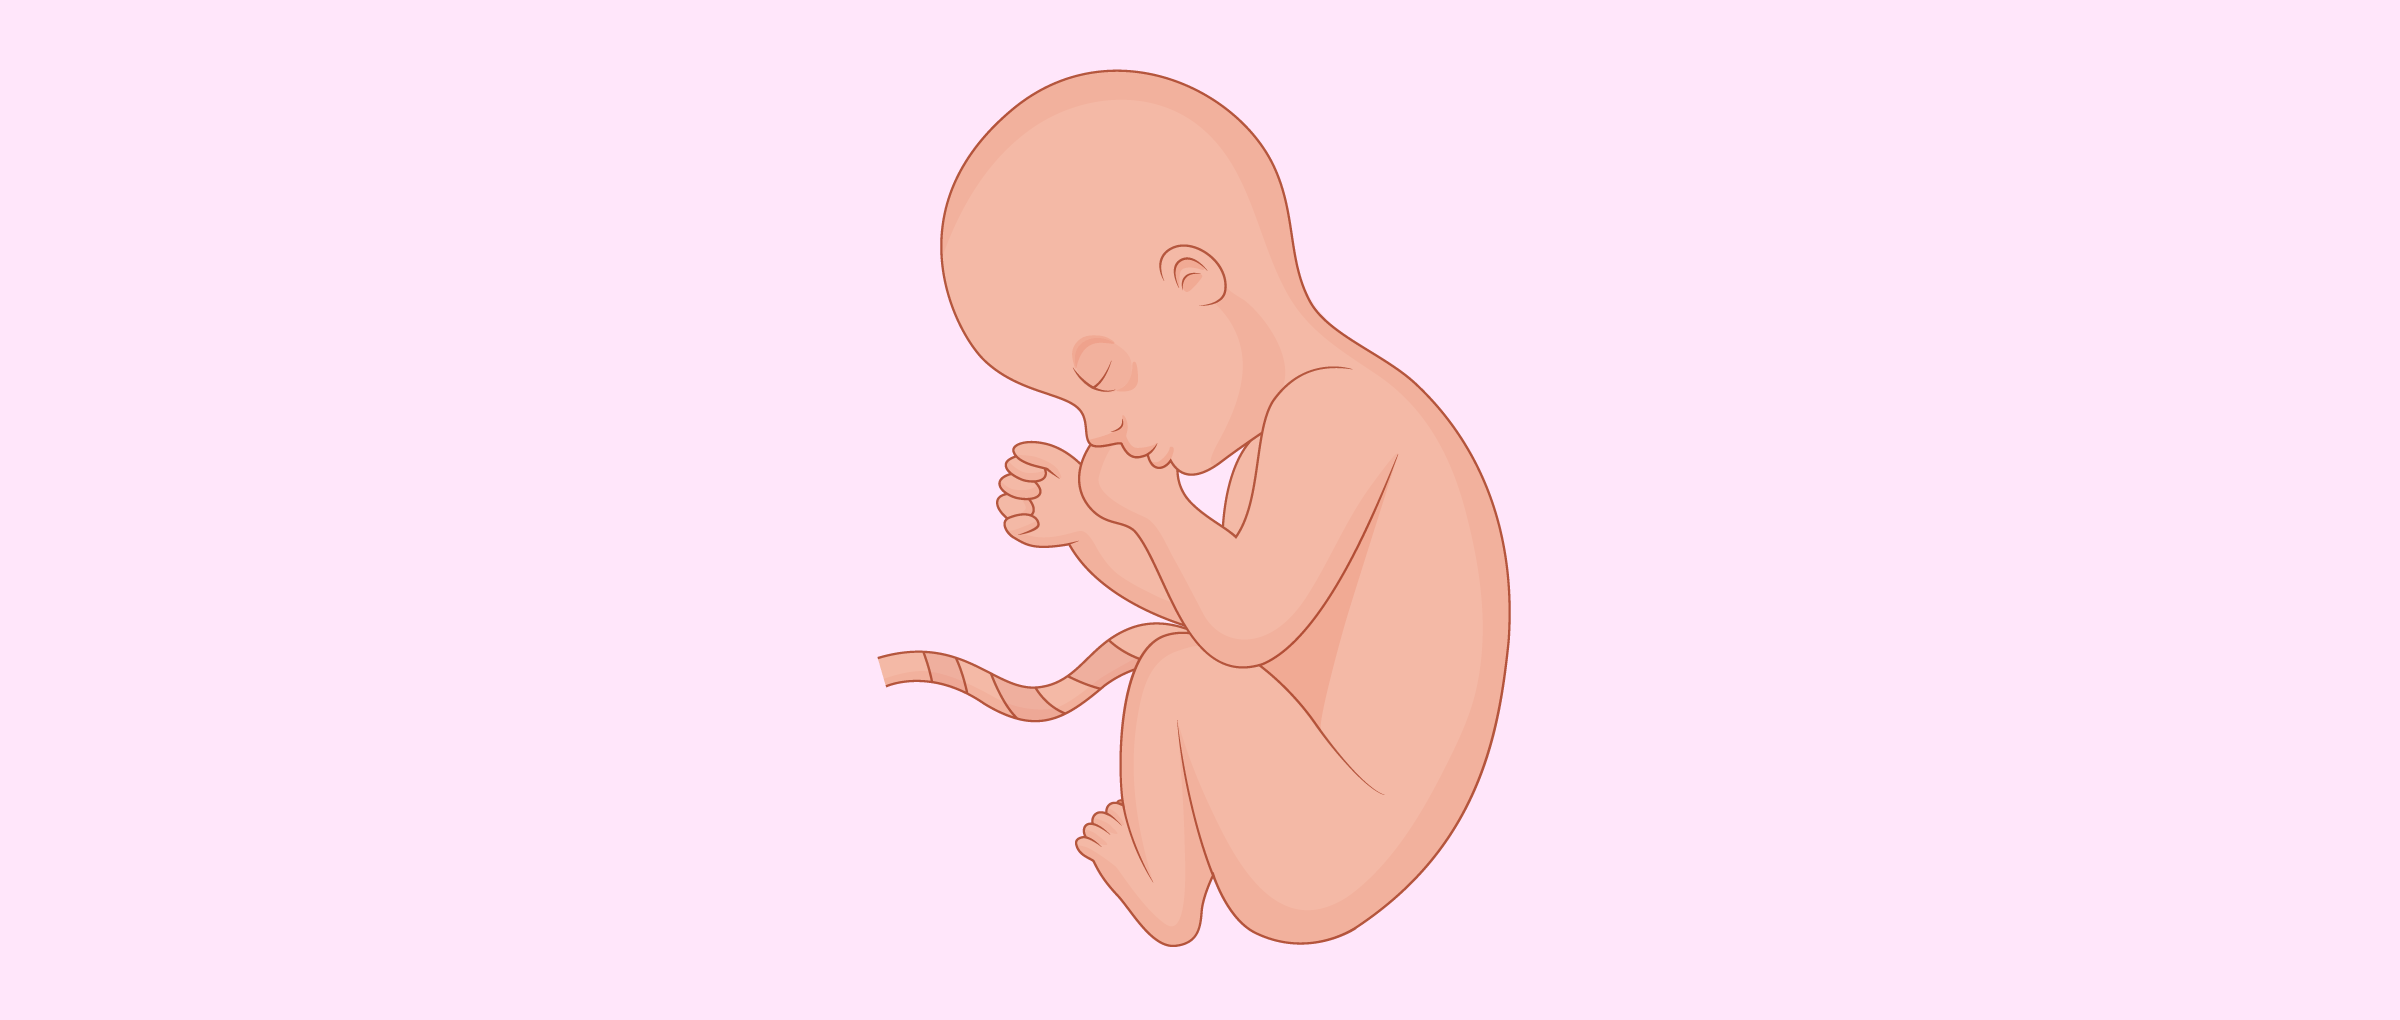 fetal position by spacemerper